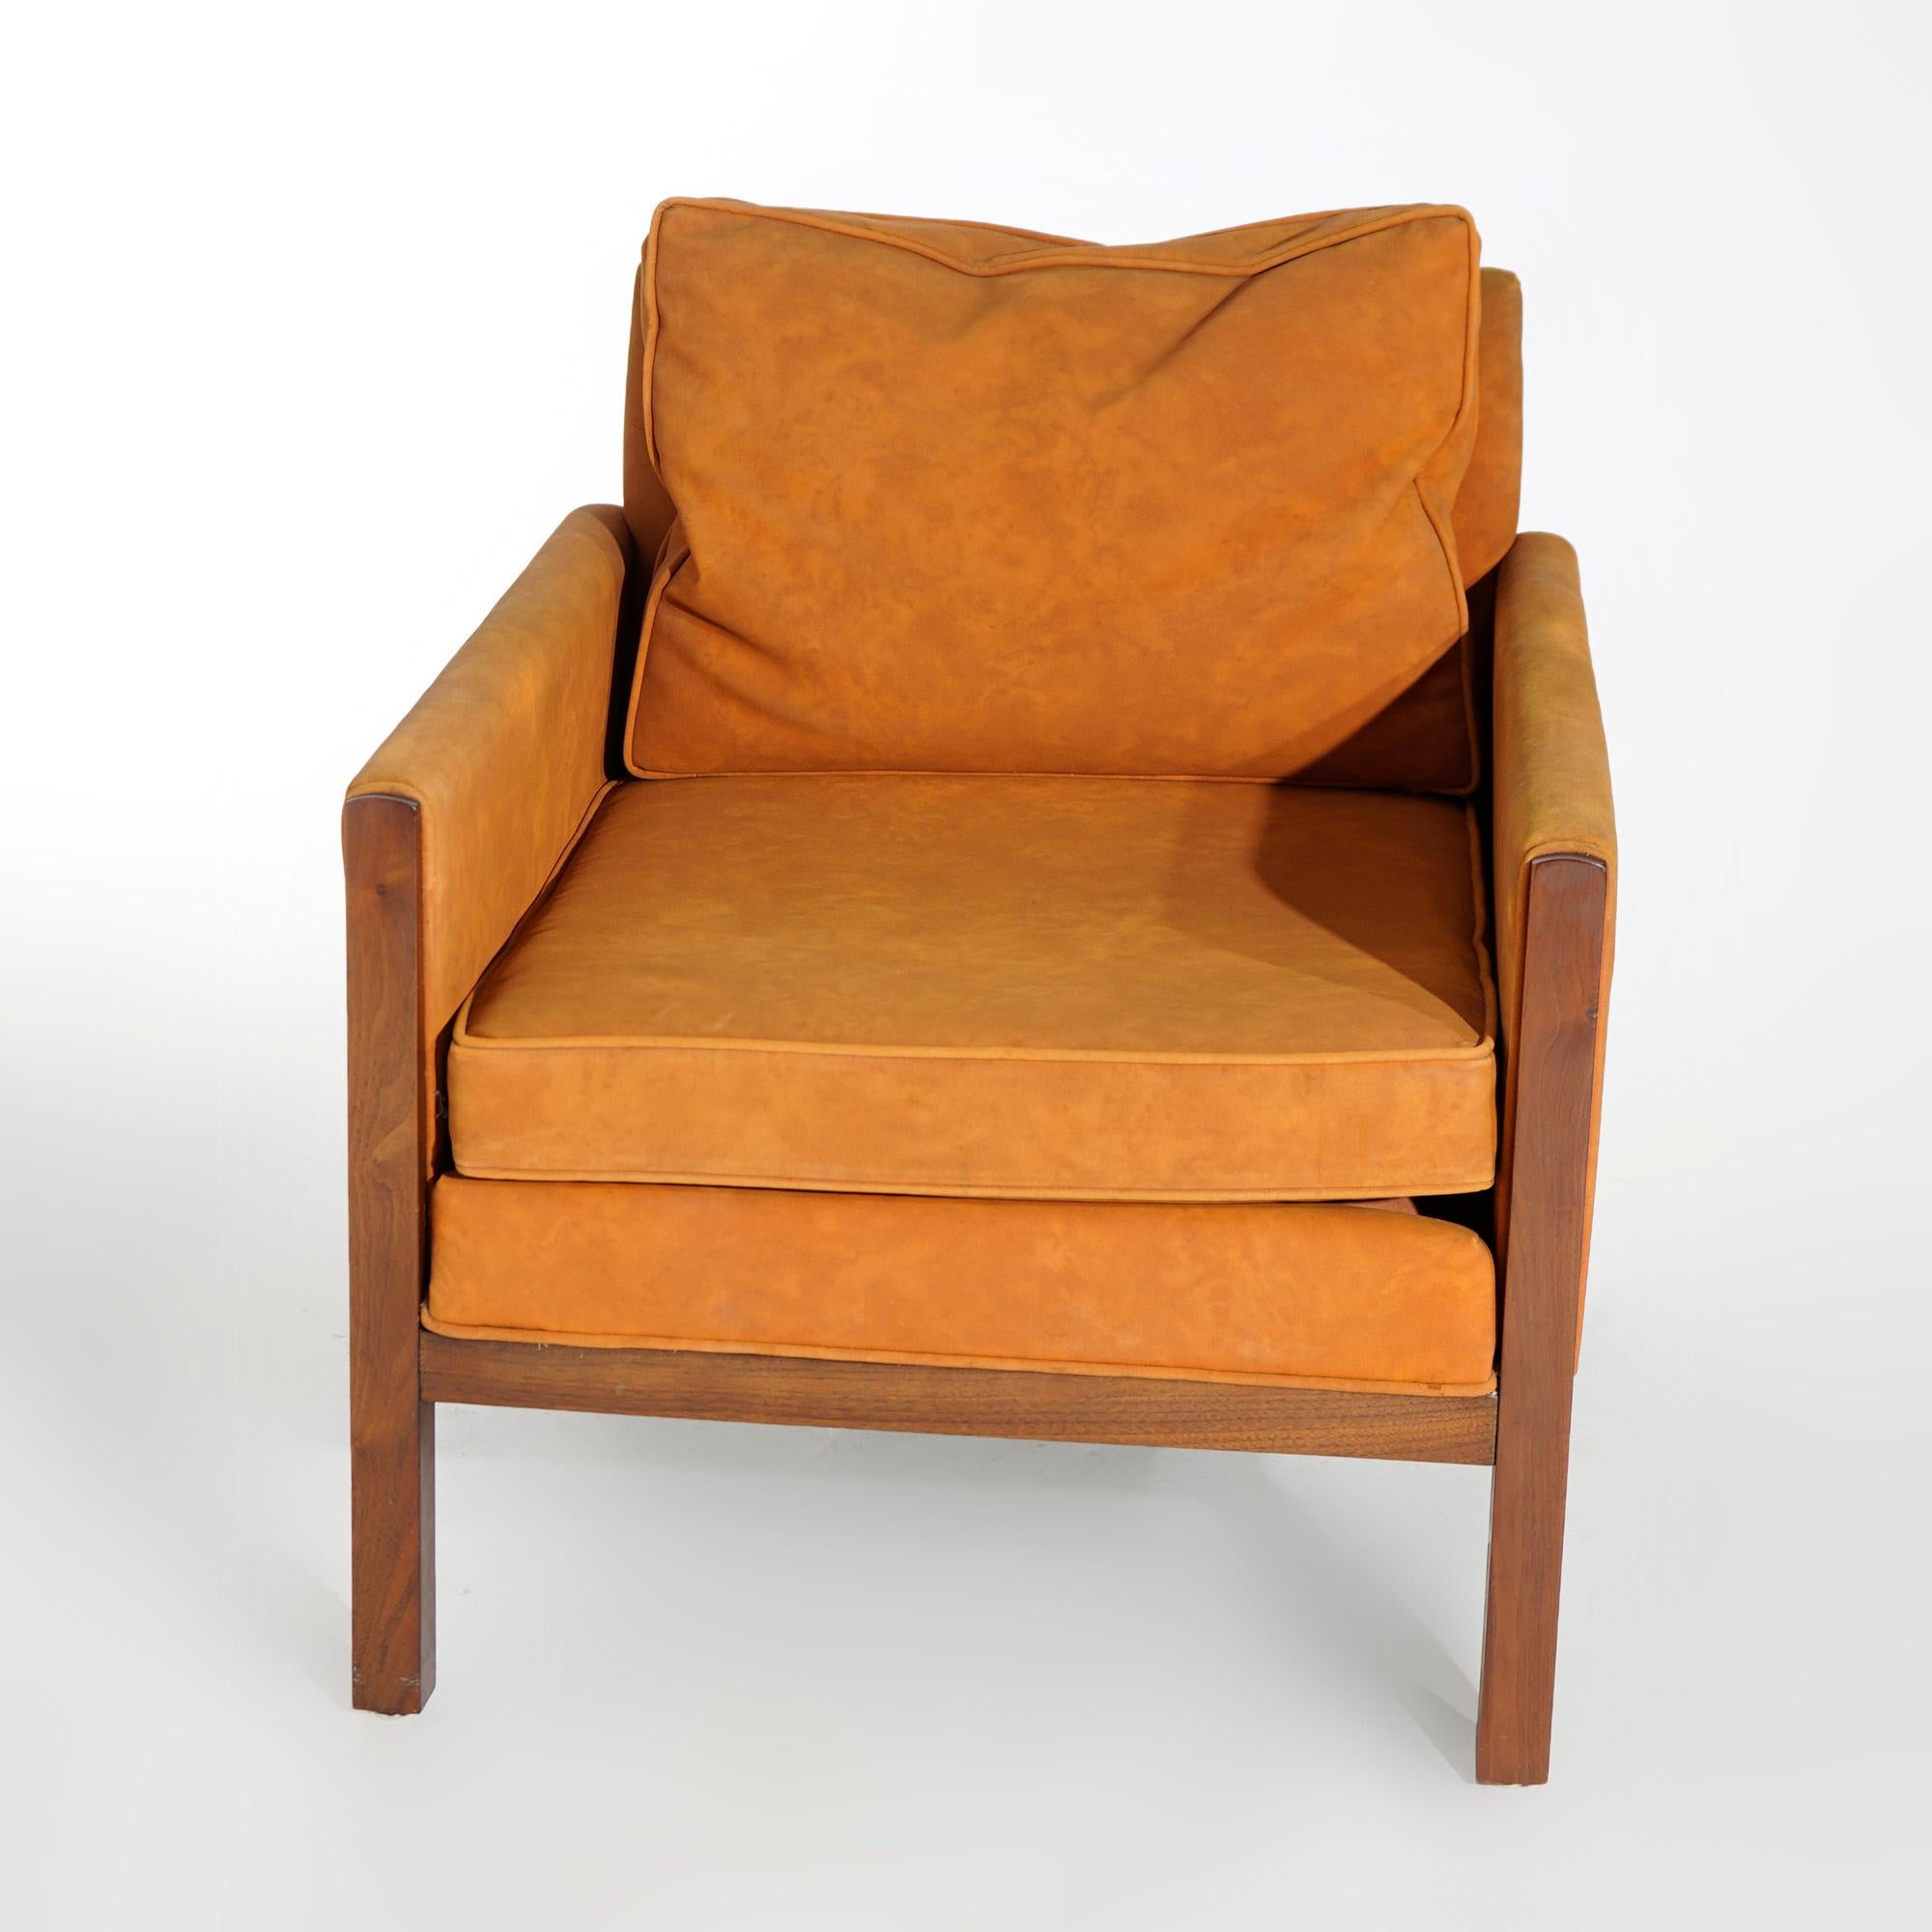 American Mid Century Danish Modern Thomasville Walnut & Faux Leather Sofa & Chair 20thC For Sale